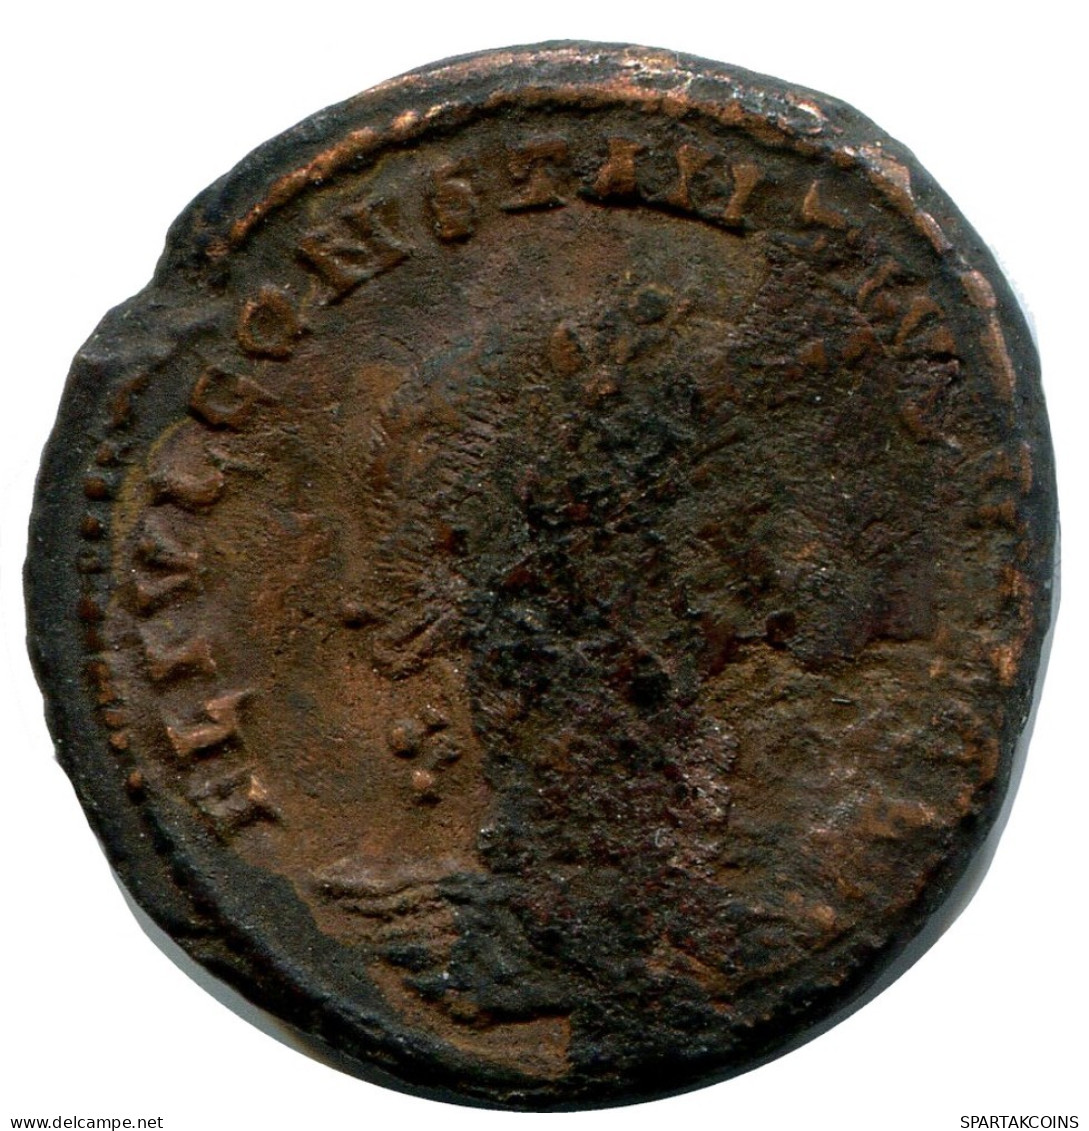 CONSTANTIUS II MINTED IN ALEKSANDRIA FOUND IN IHNASYAH HOARD #ANC10199.14.U.A - The Christian Empire (307 AD Tot 363 AD)